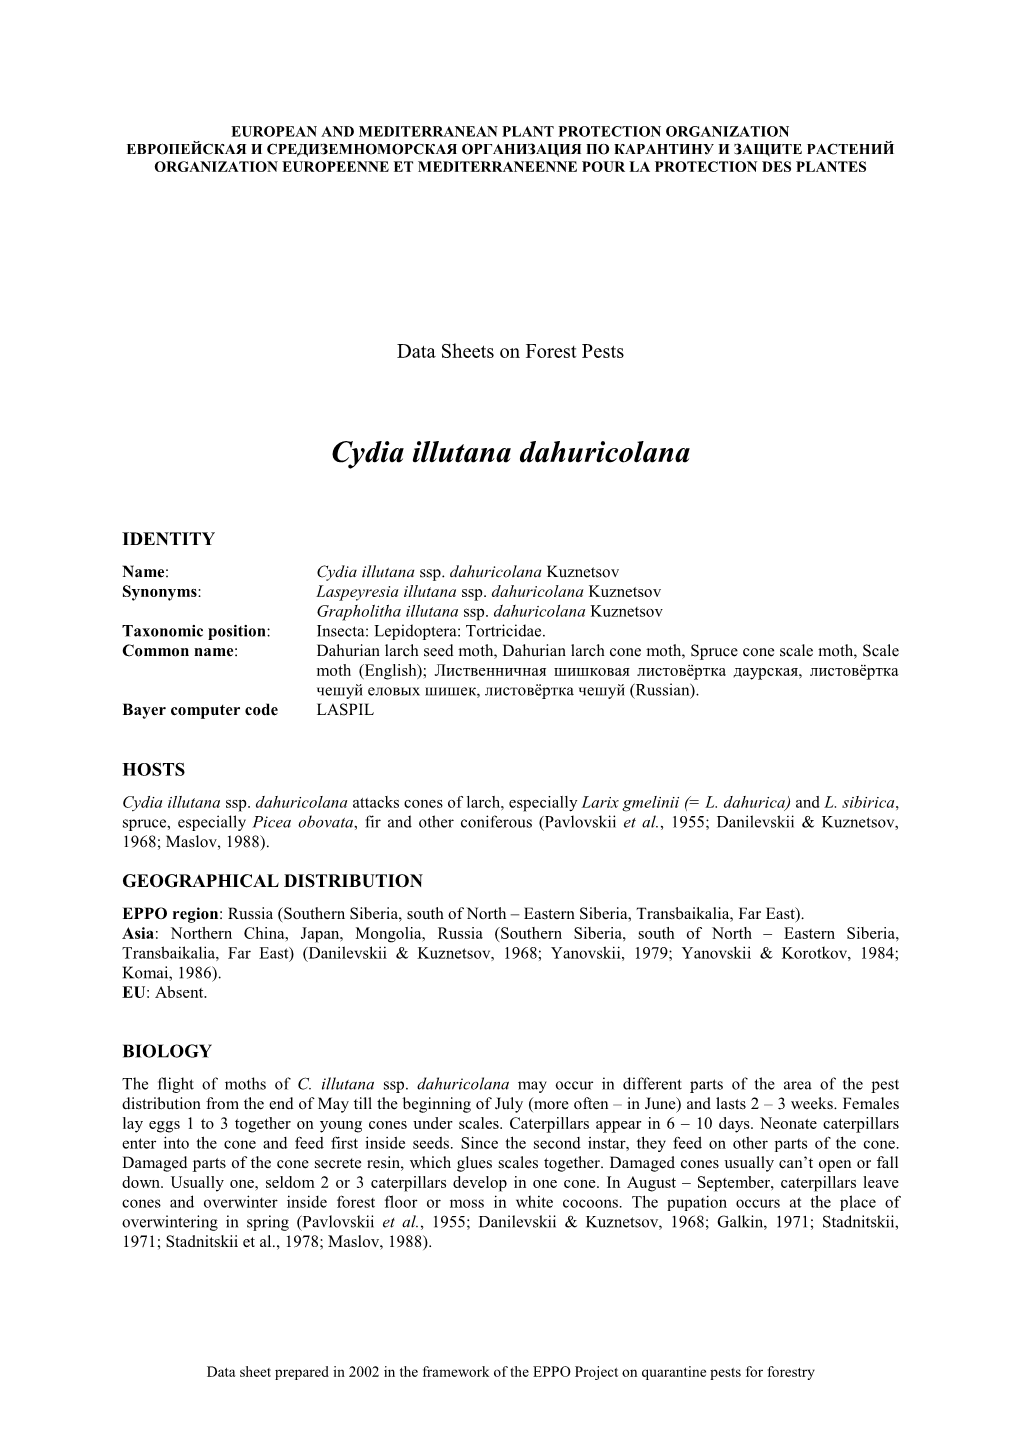 Data Sheet on Cydia Illutana Dahuricolana